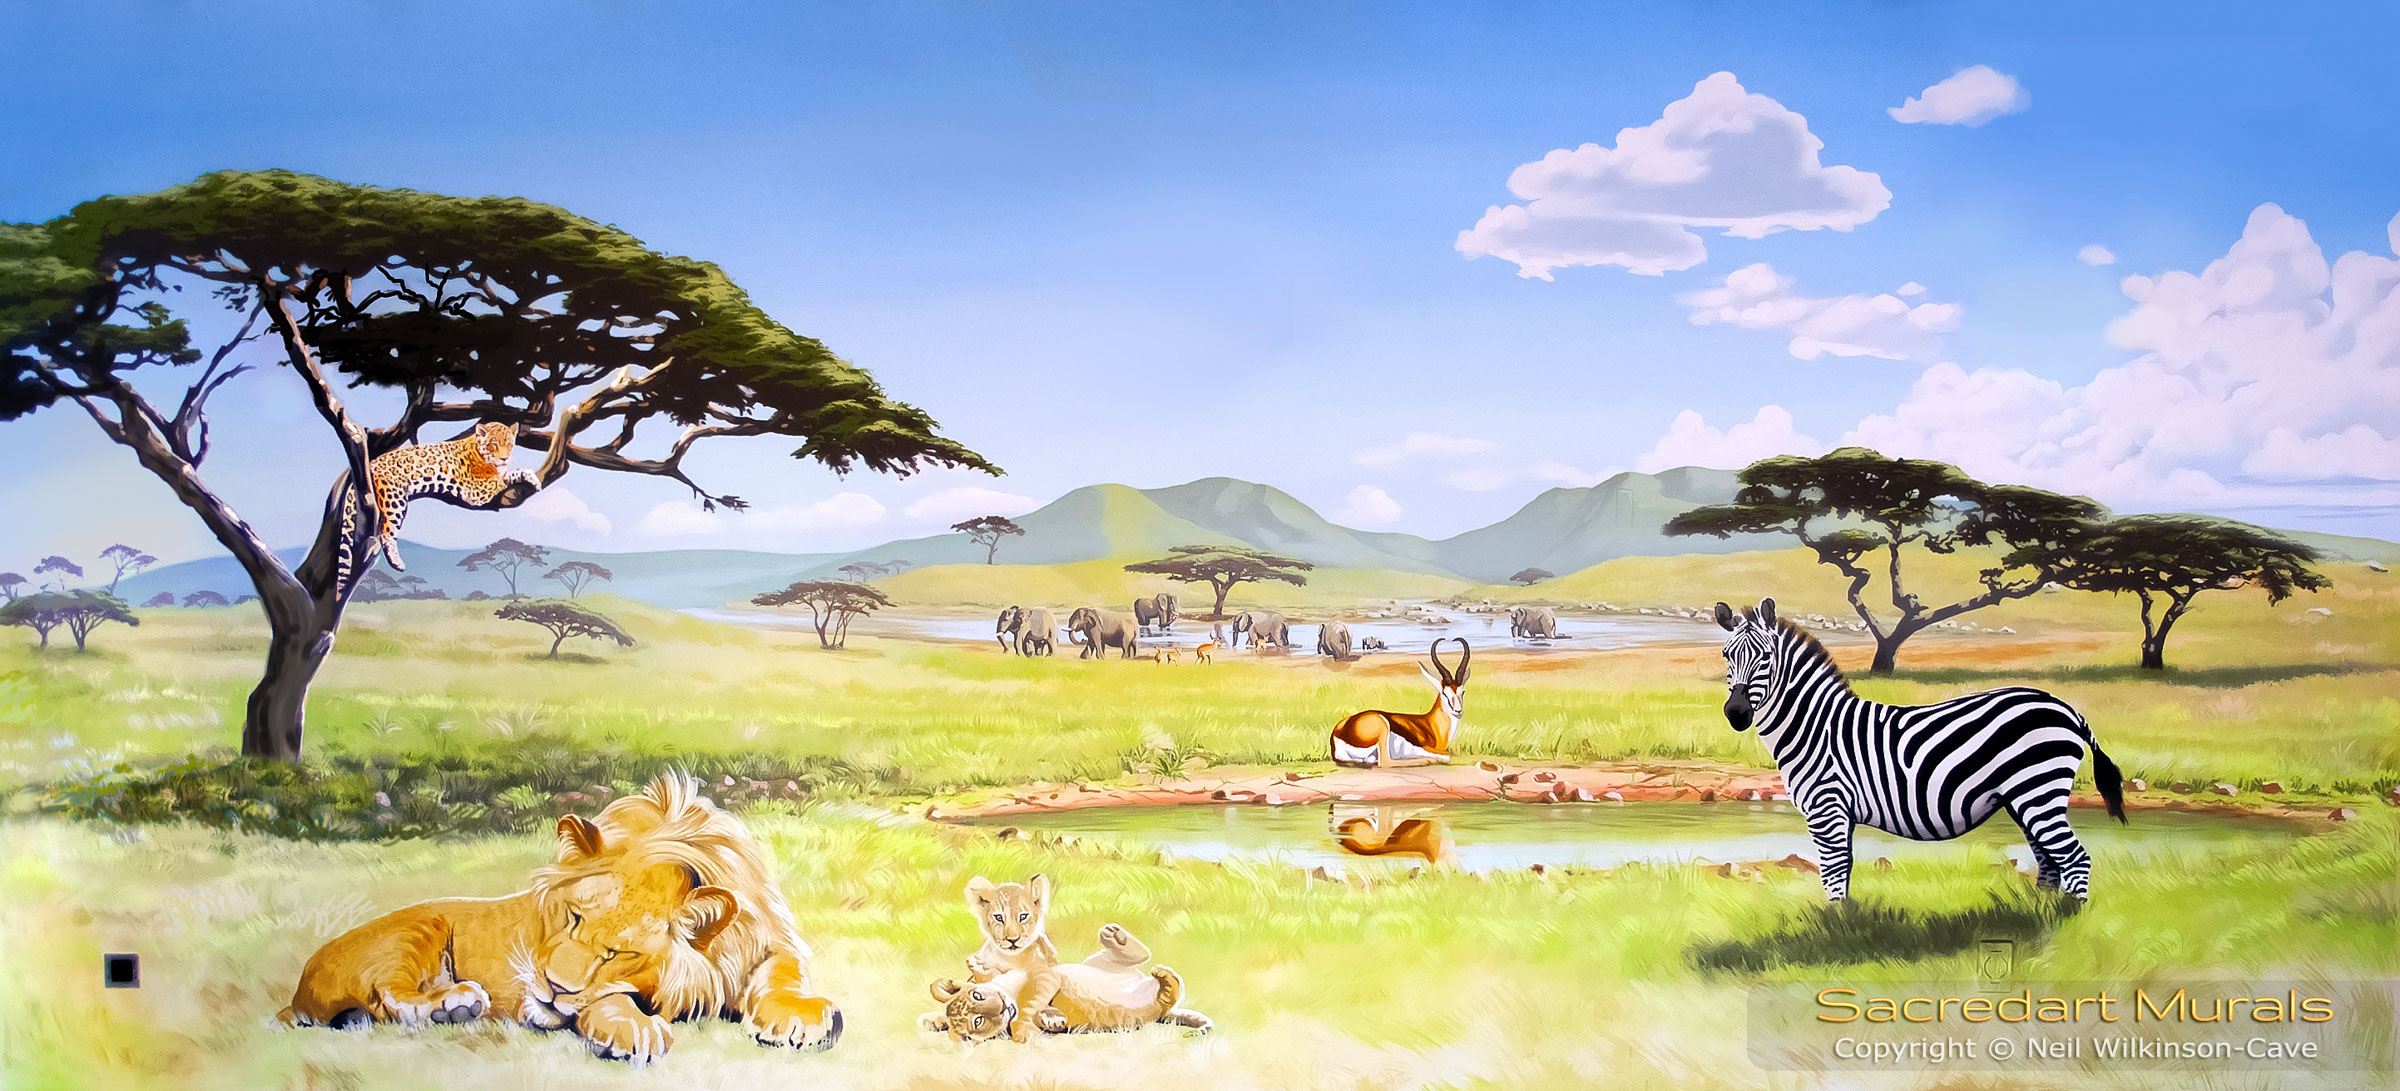 mural safari lions zebra jaguar elephants serengeti